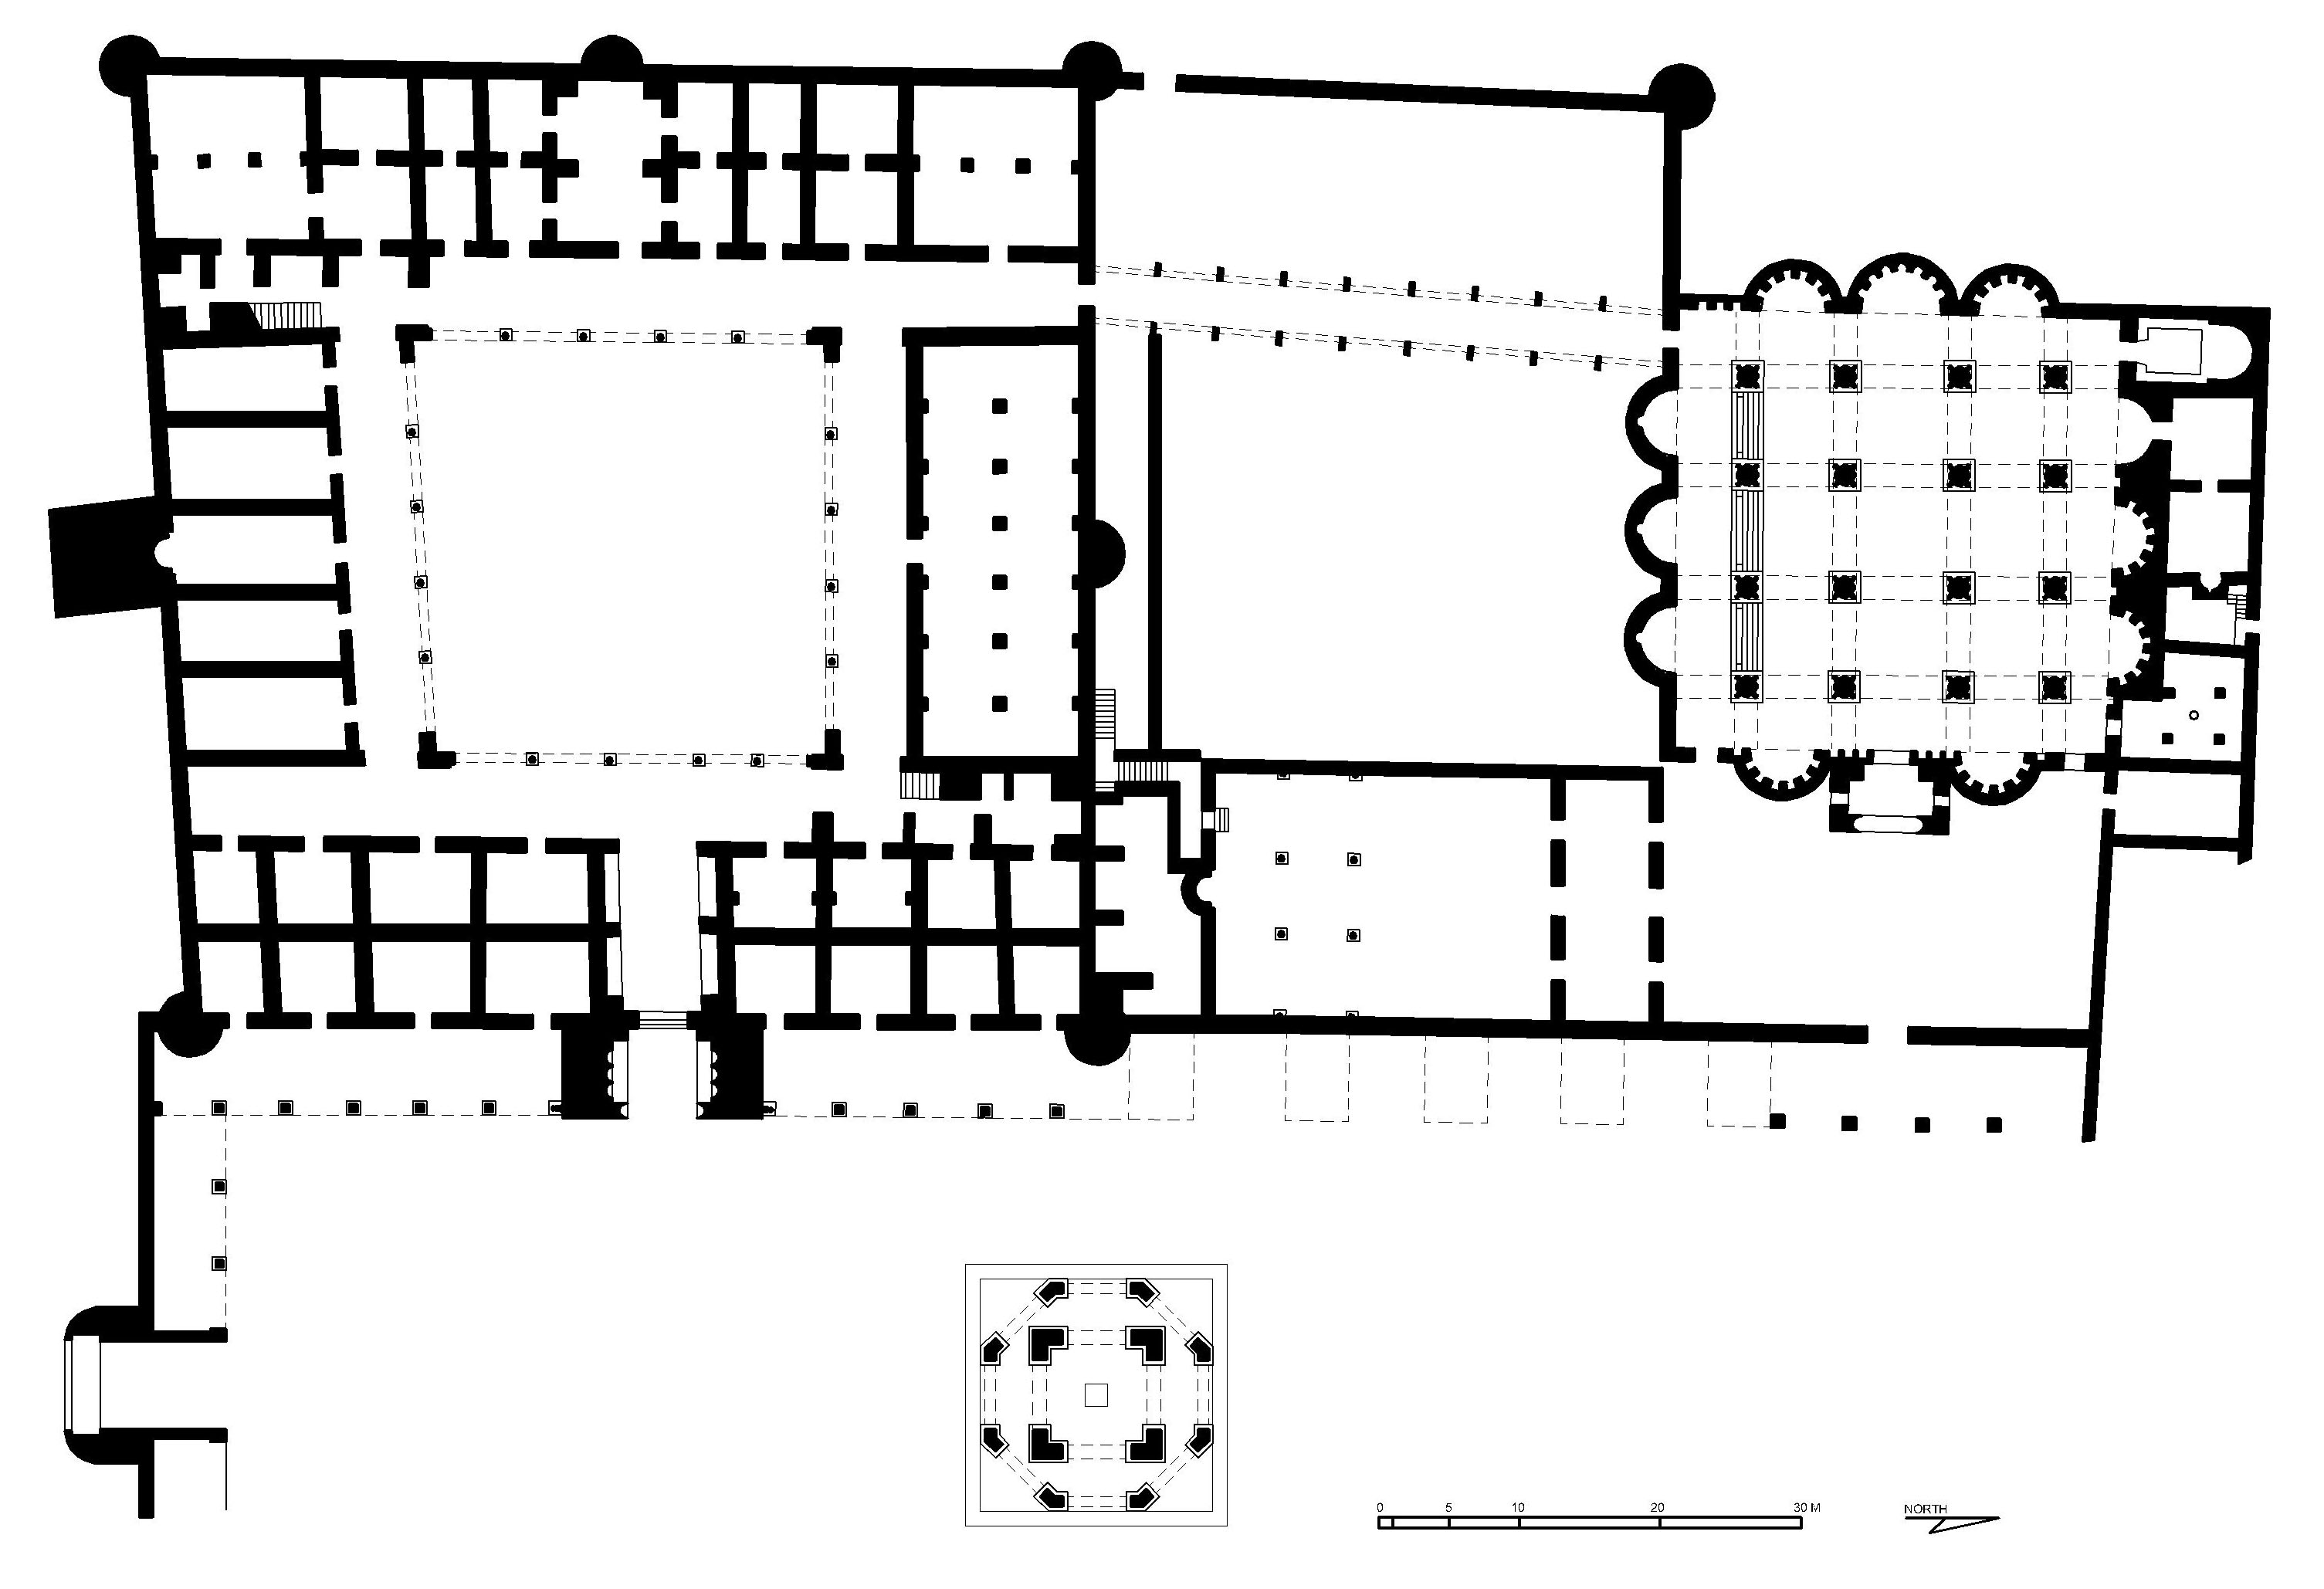 Floor plan of Khirbat al-Mafjar, Jericho